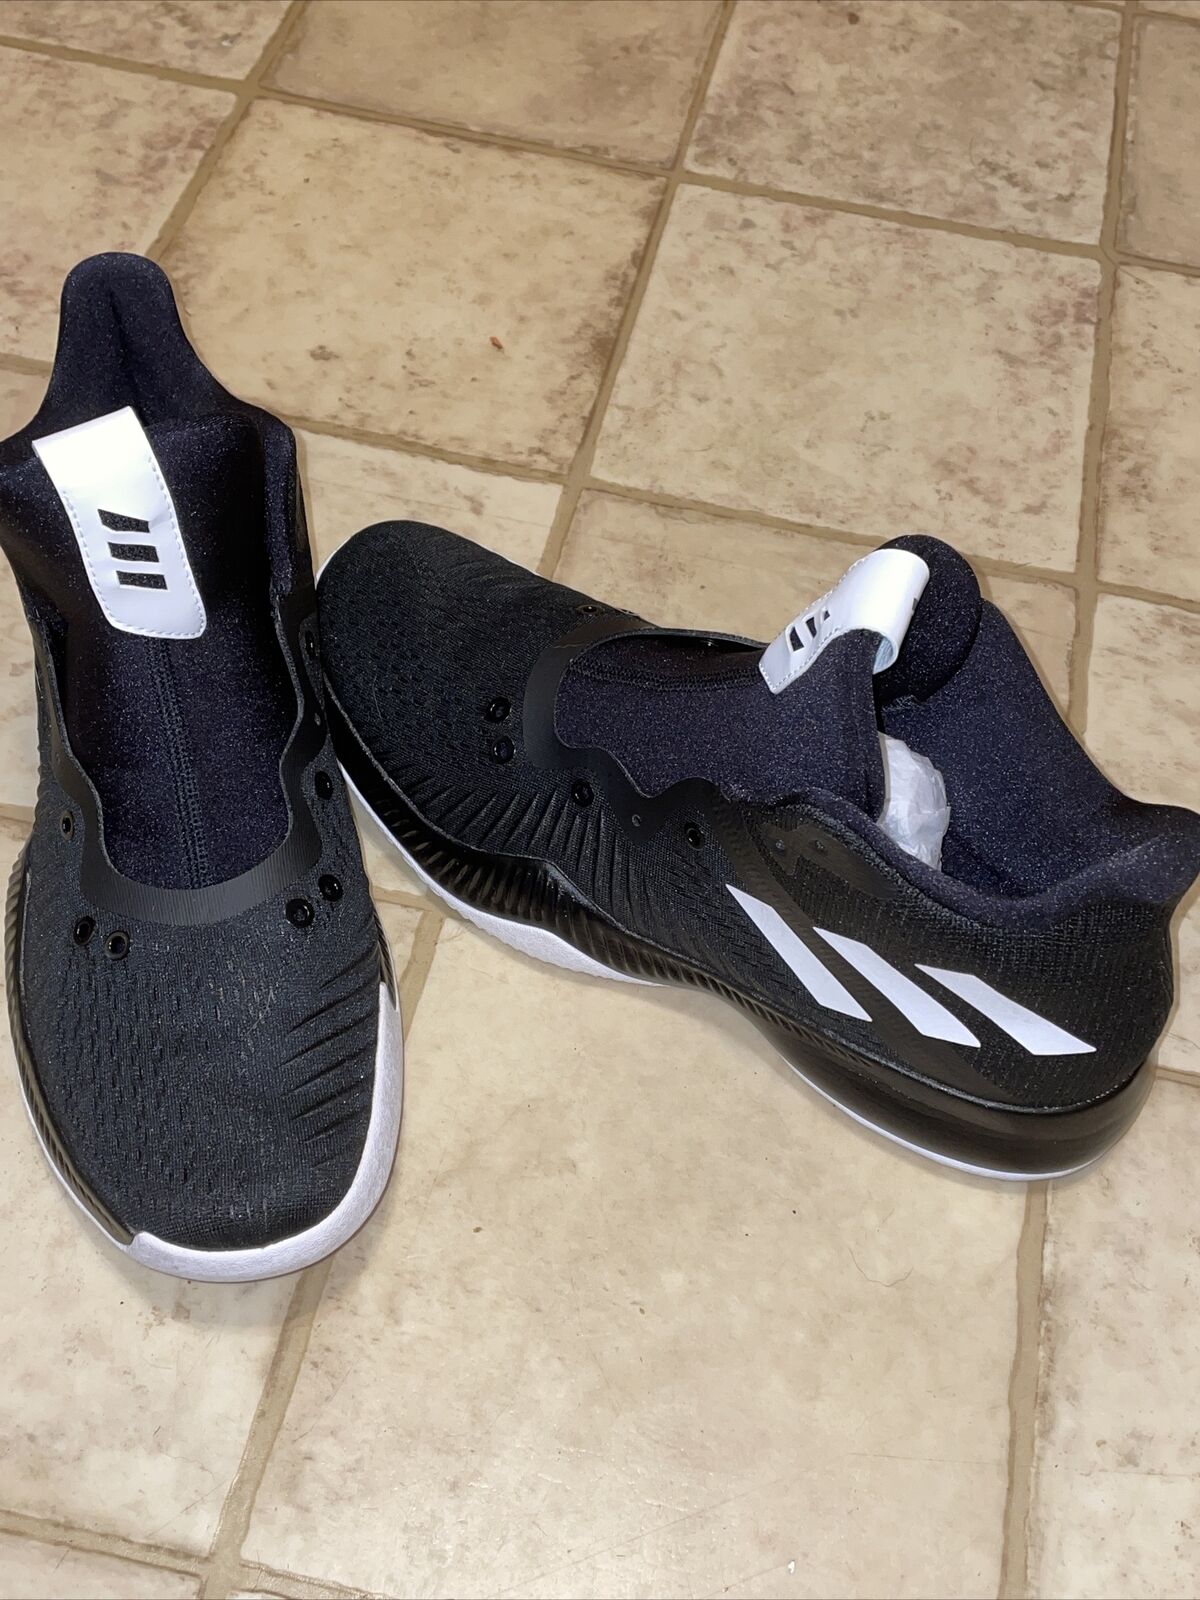 Adidas Men Basketball Shoes Size 16 Medium Width Never Worn Needs Laces No Box